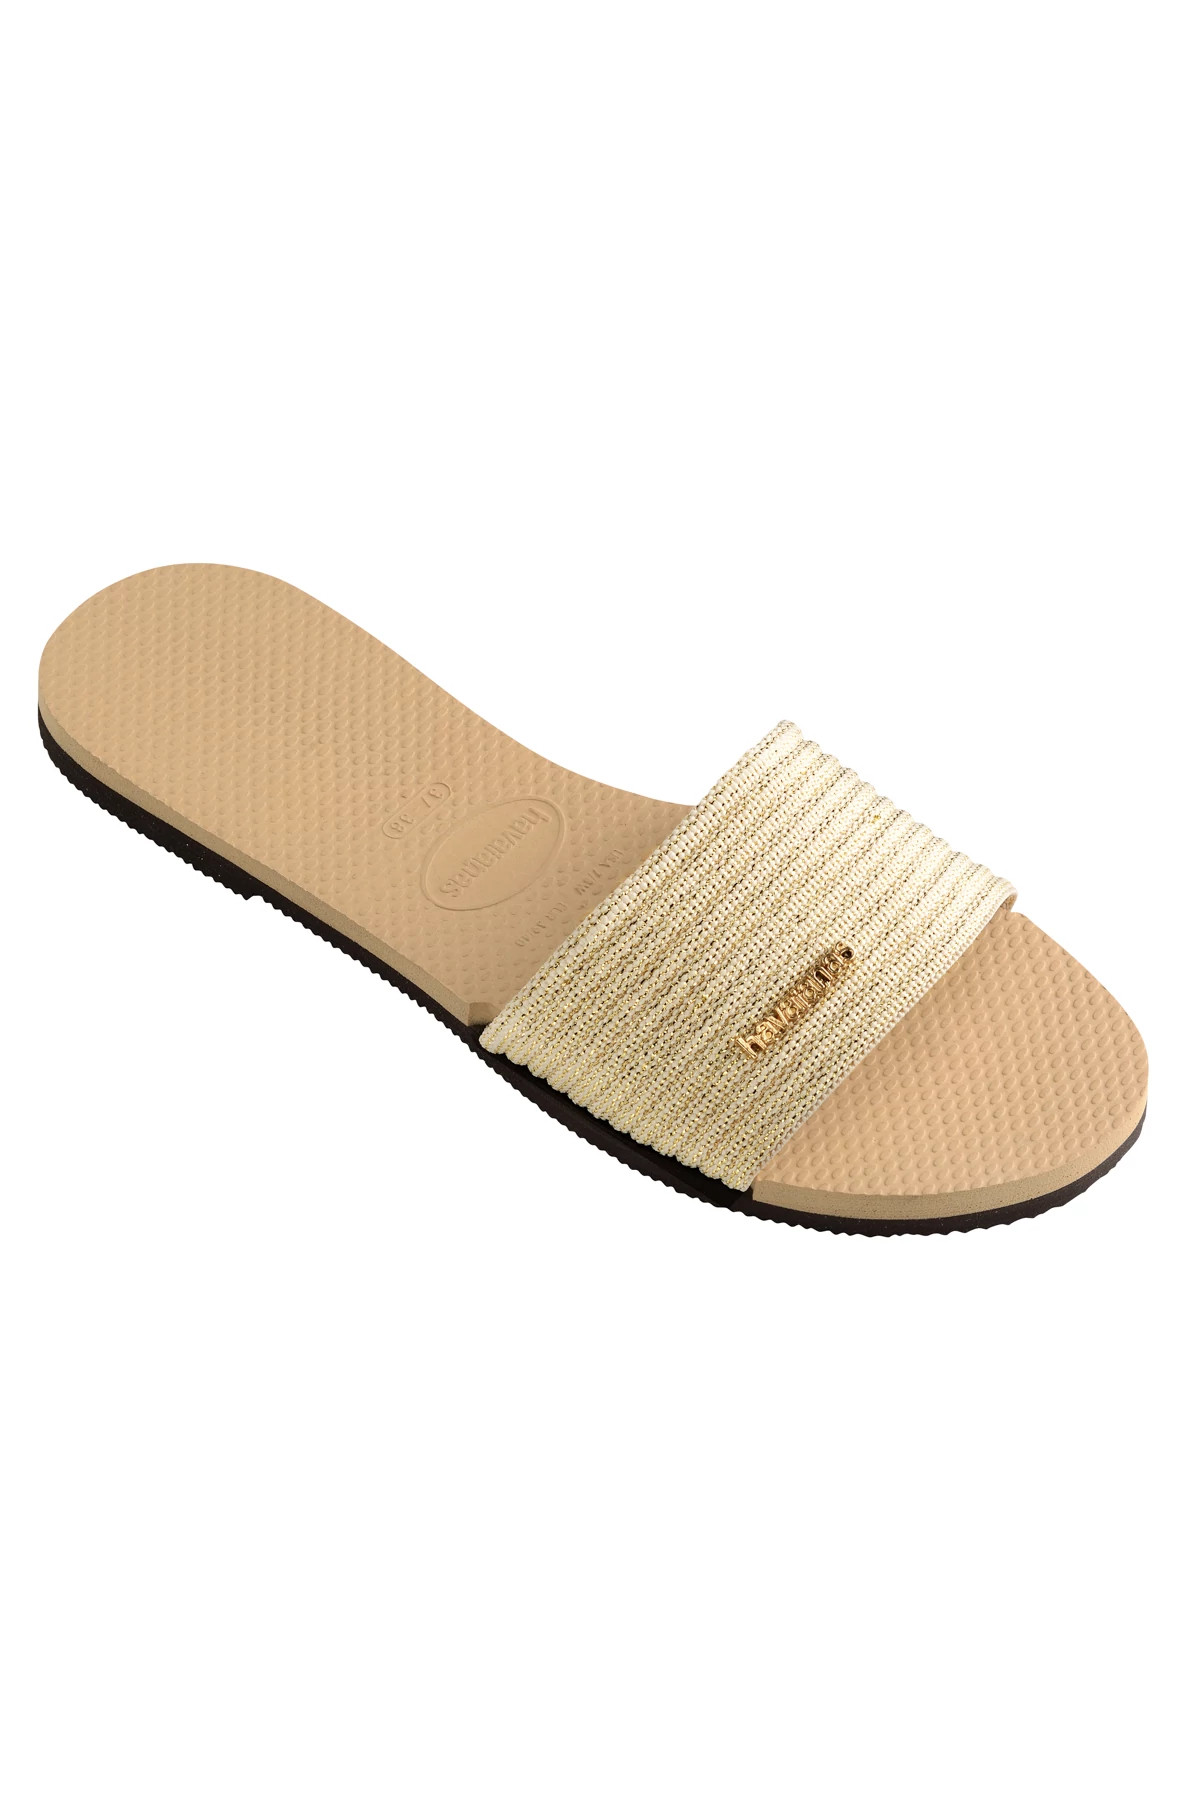 GOLD Malta Metallic Sandals image number 2